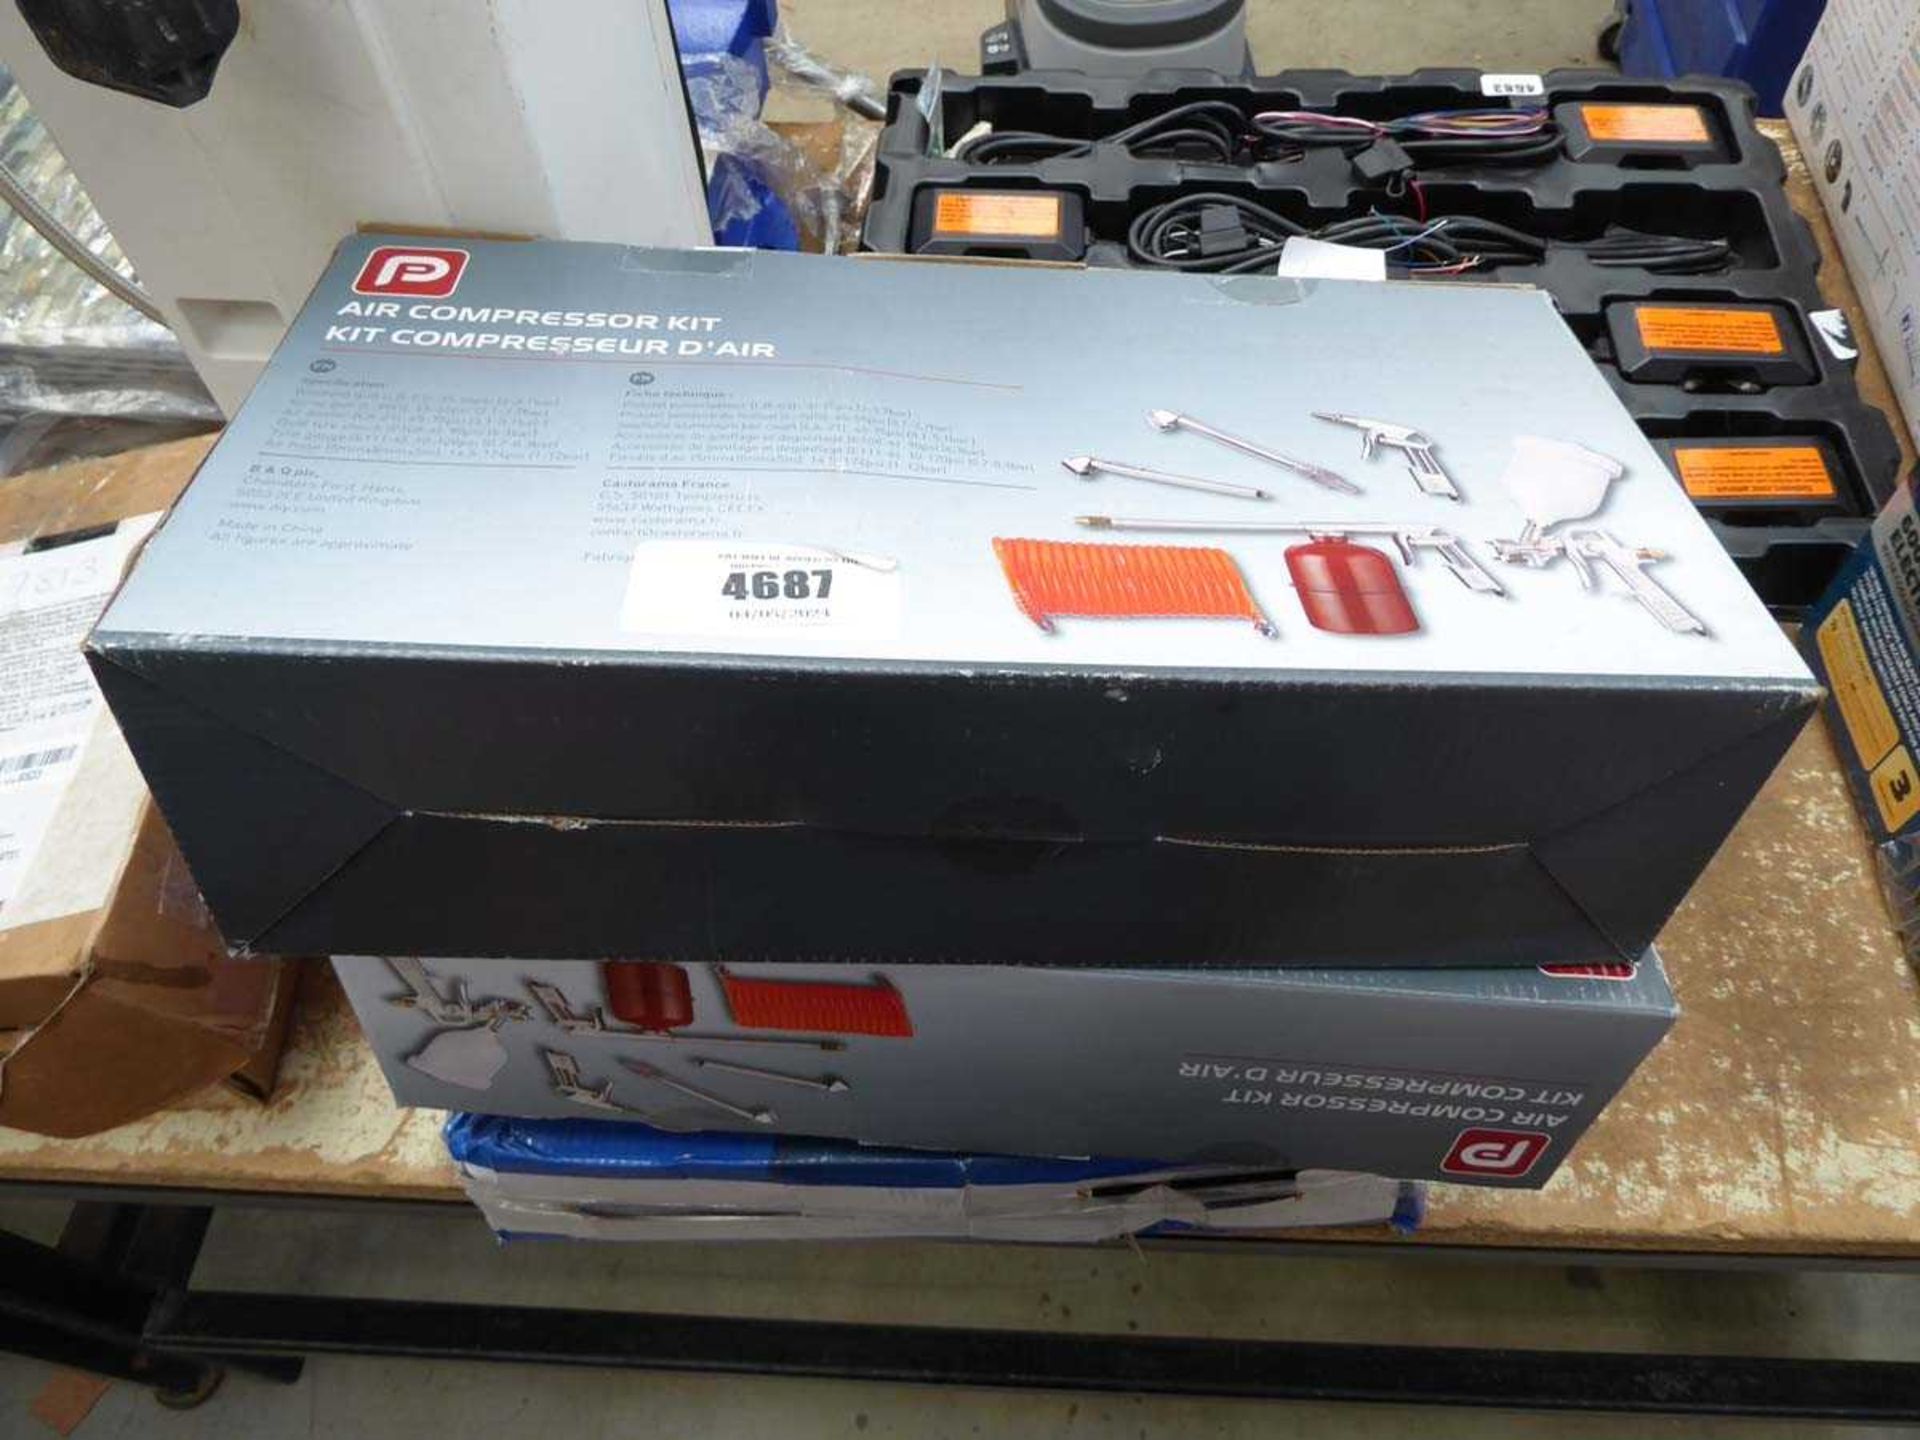 3 boxes of air compressor kits